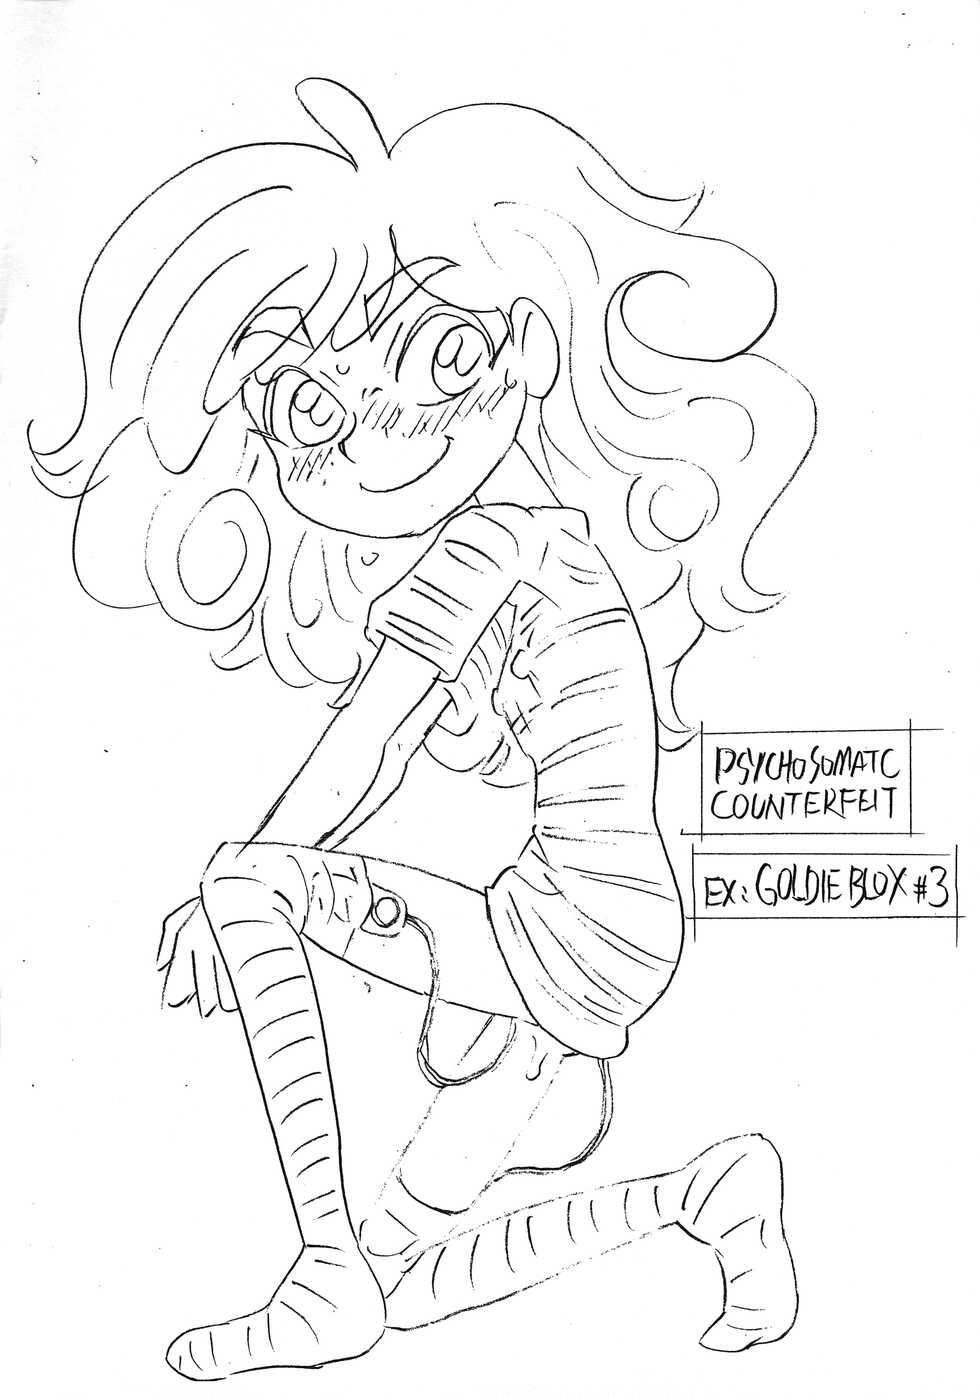 [Union of the snake (Shinda Mane)] Psychomatic Counterfeit EX: GoldieBlox#3 (GoldieBlox) - Page 23